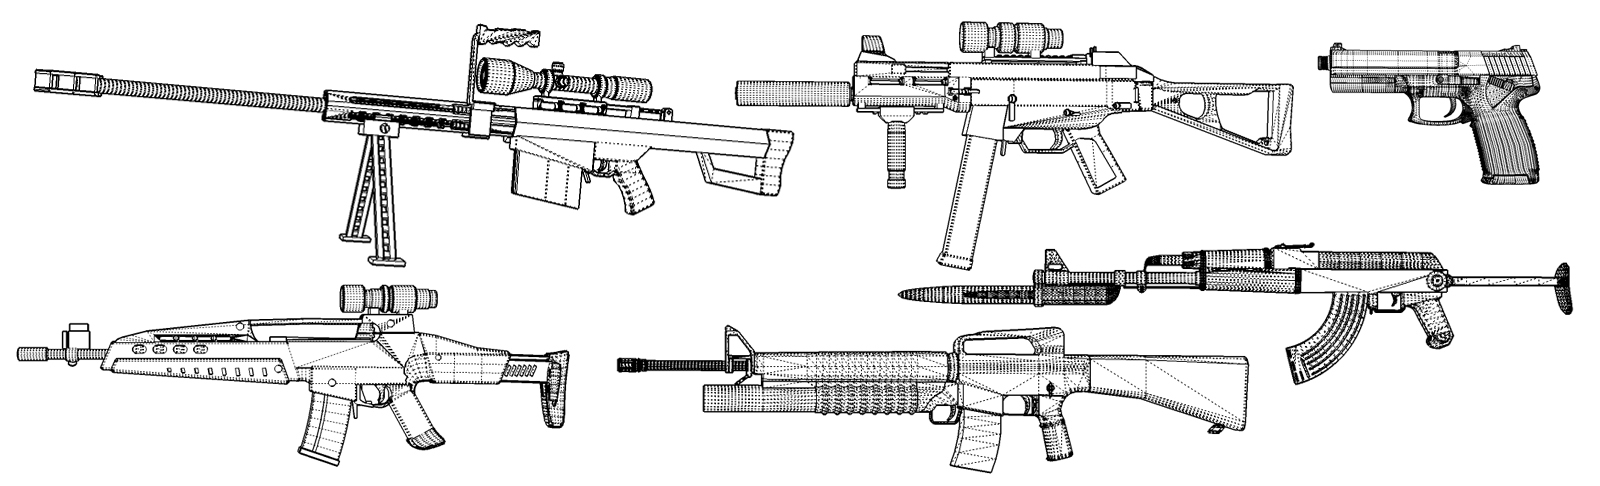 Gun_concepts_02_skp_lines.jpg